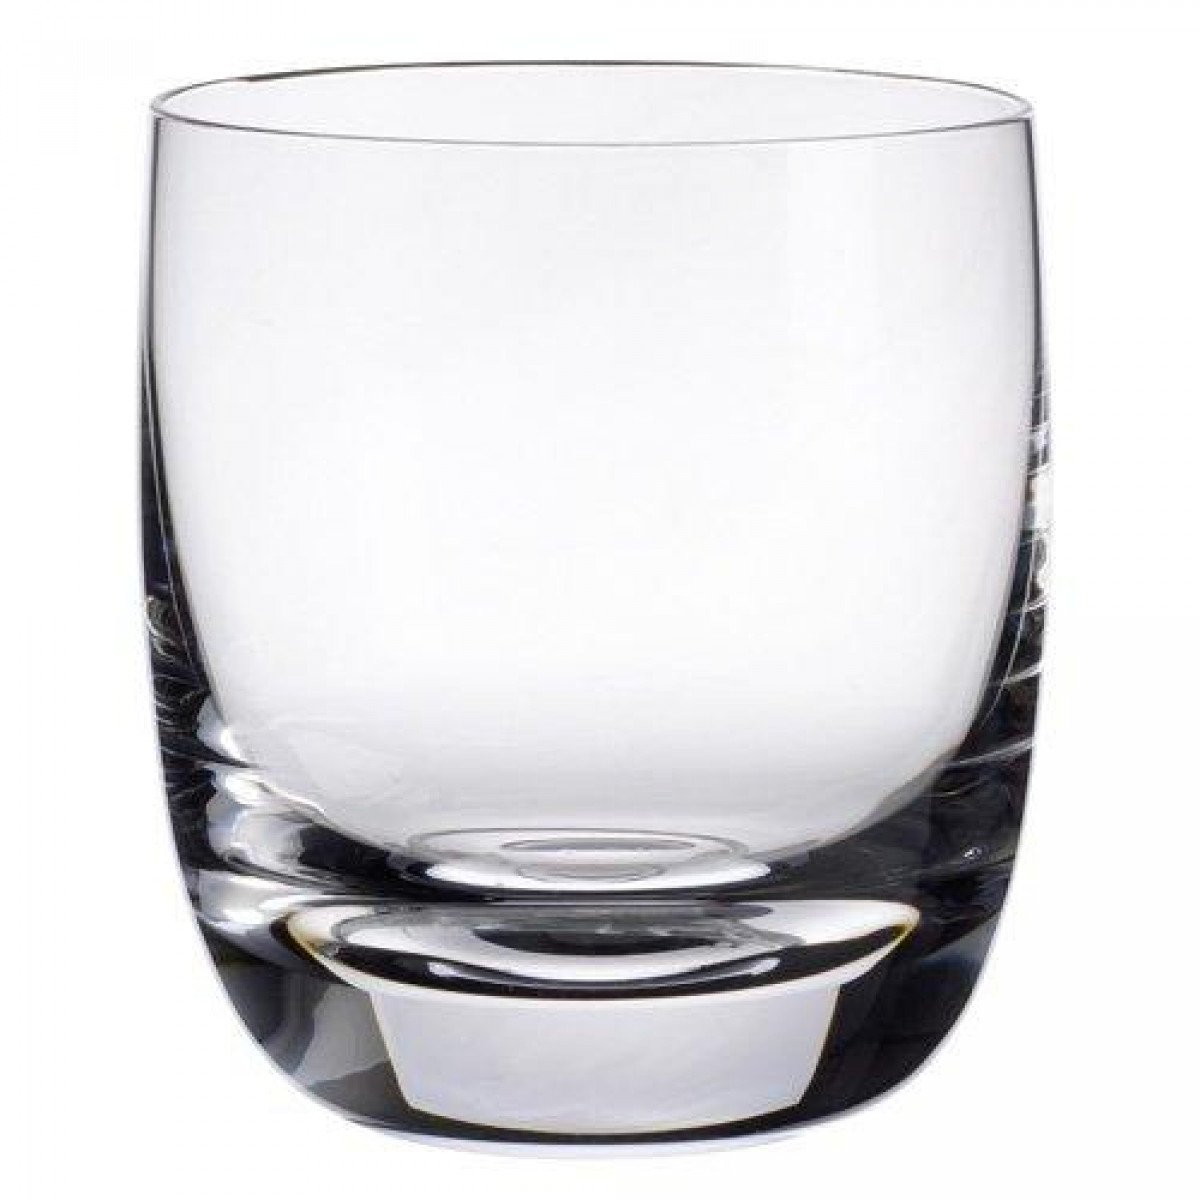 Scotch Whisky Стакан для виски №1 8,7 см  Villeroy & Boch
https://spb.v-b.ru
г.Санкт-Петербург
eshop@v-b.spb.ru
+7(812)3801977